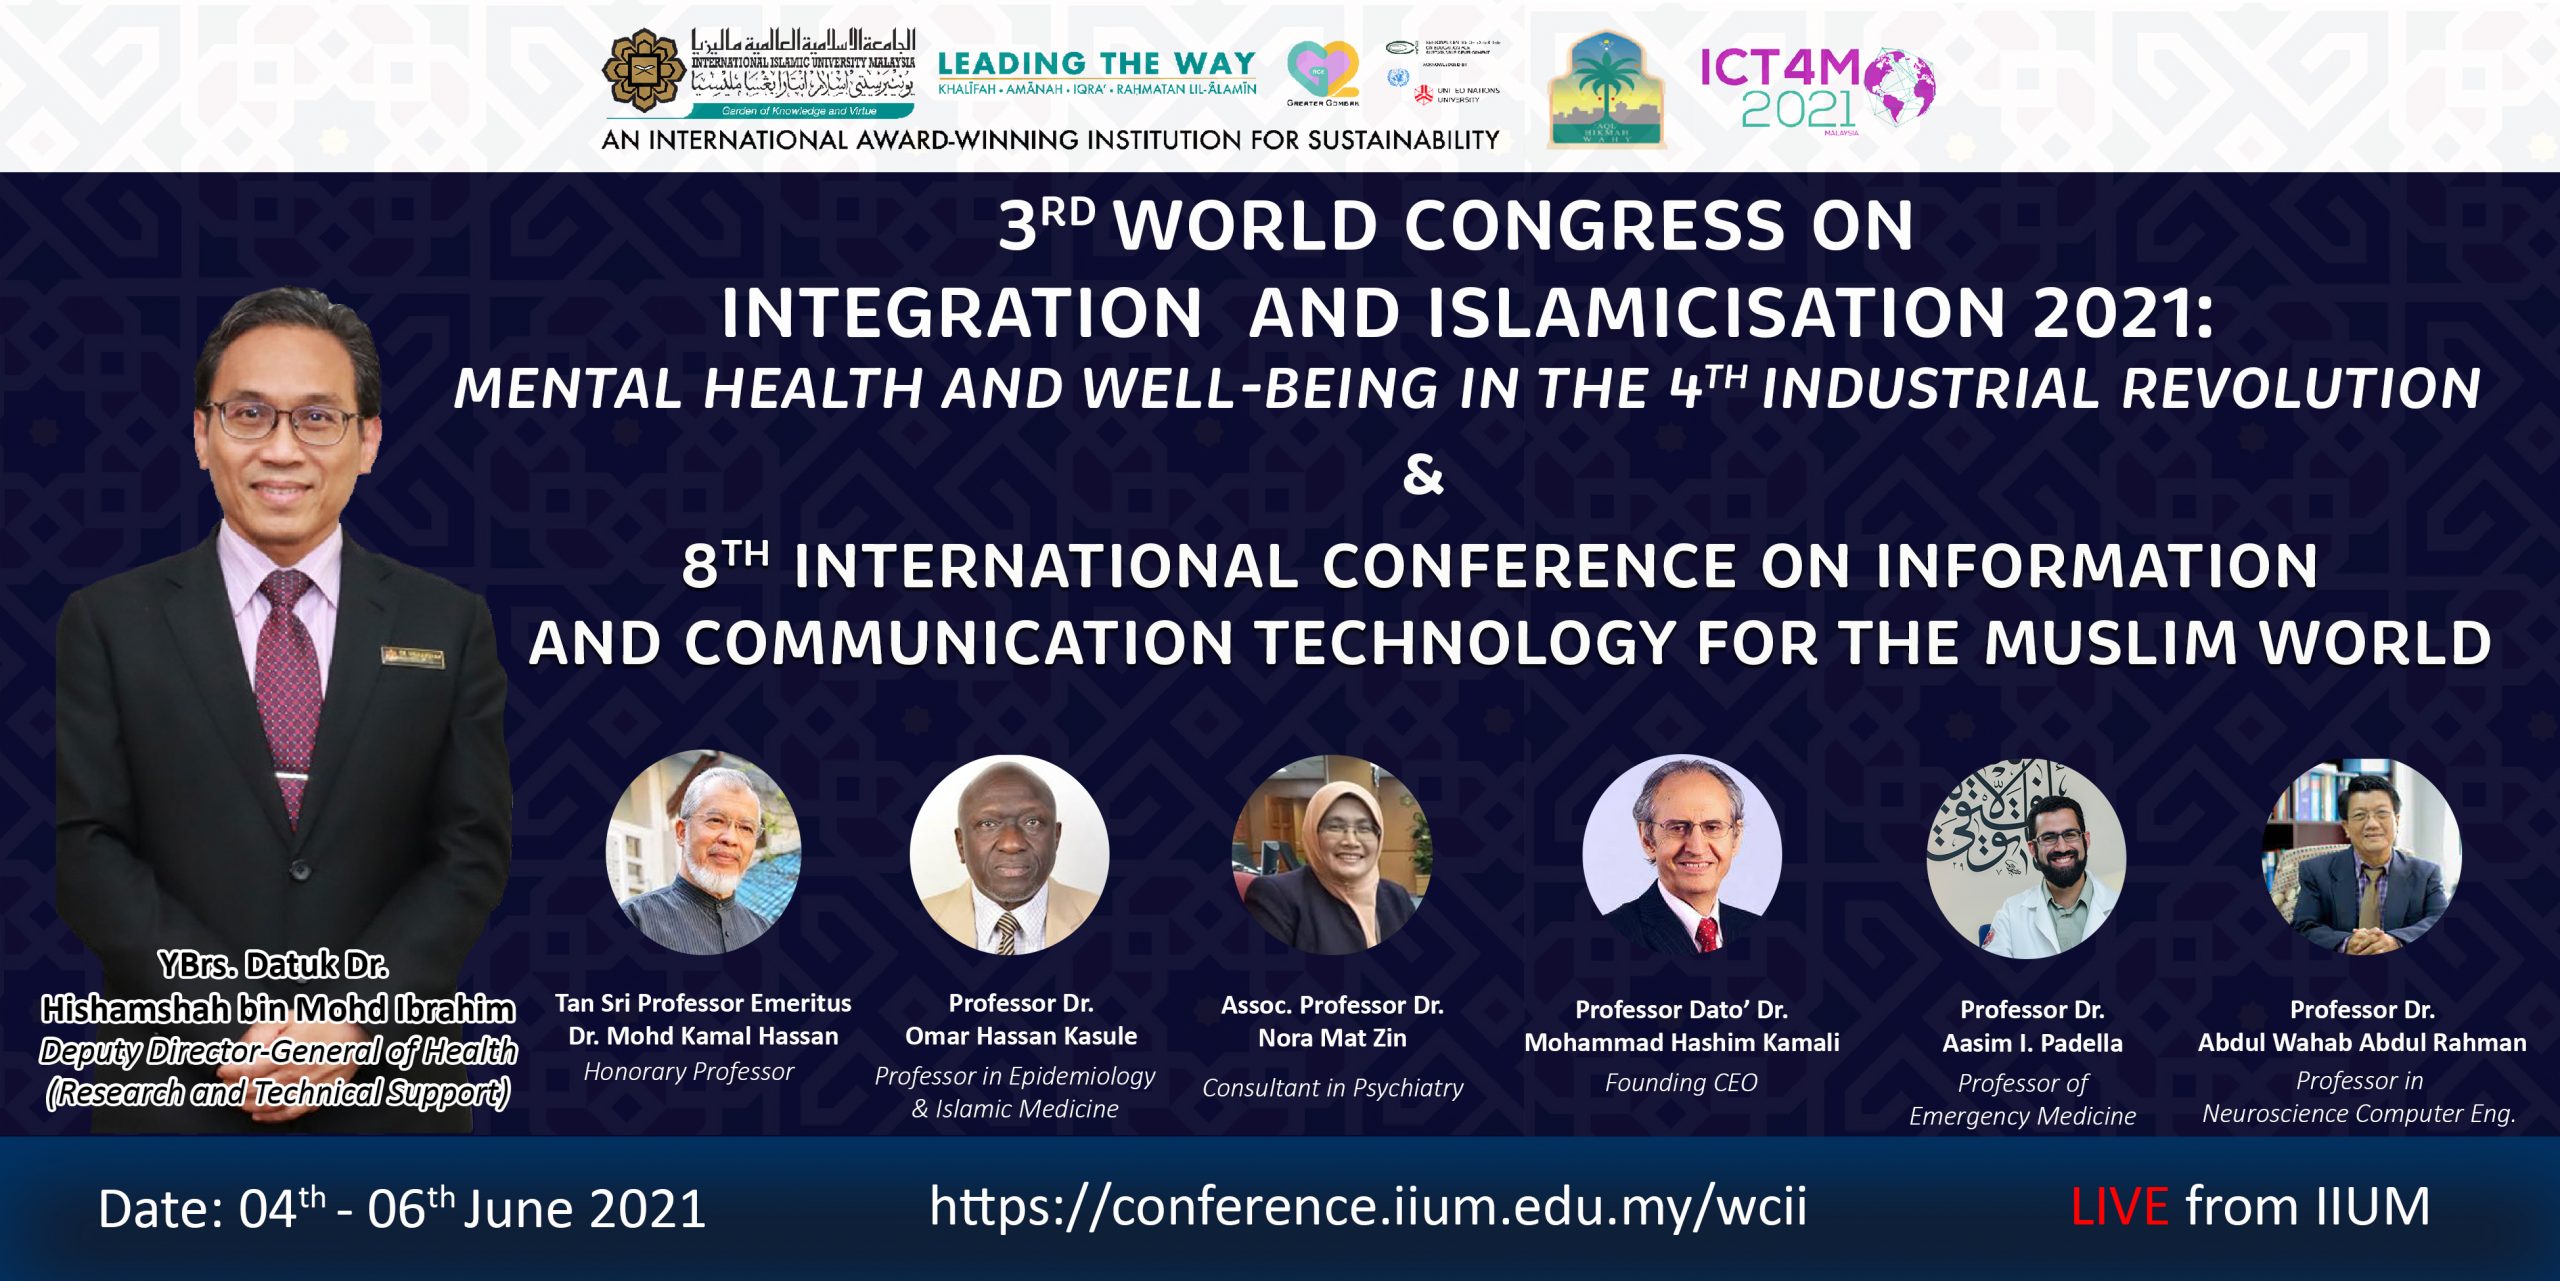 3rd World Congress on Integration & Islamicisation 2021 (3WCII) 4th - 6th June 201